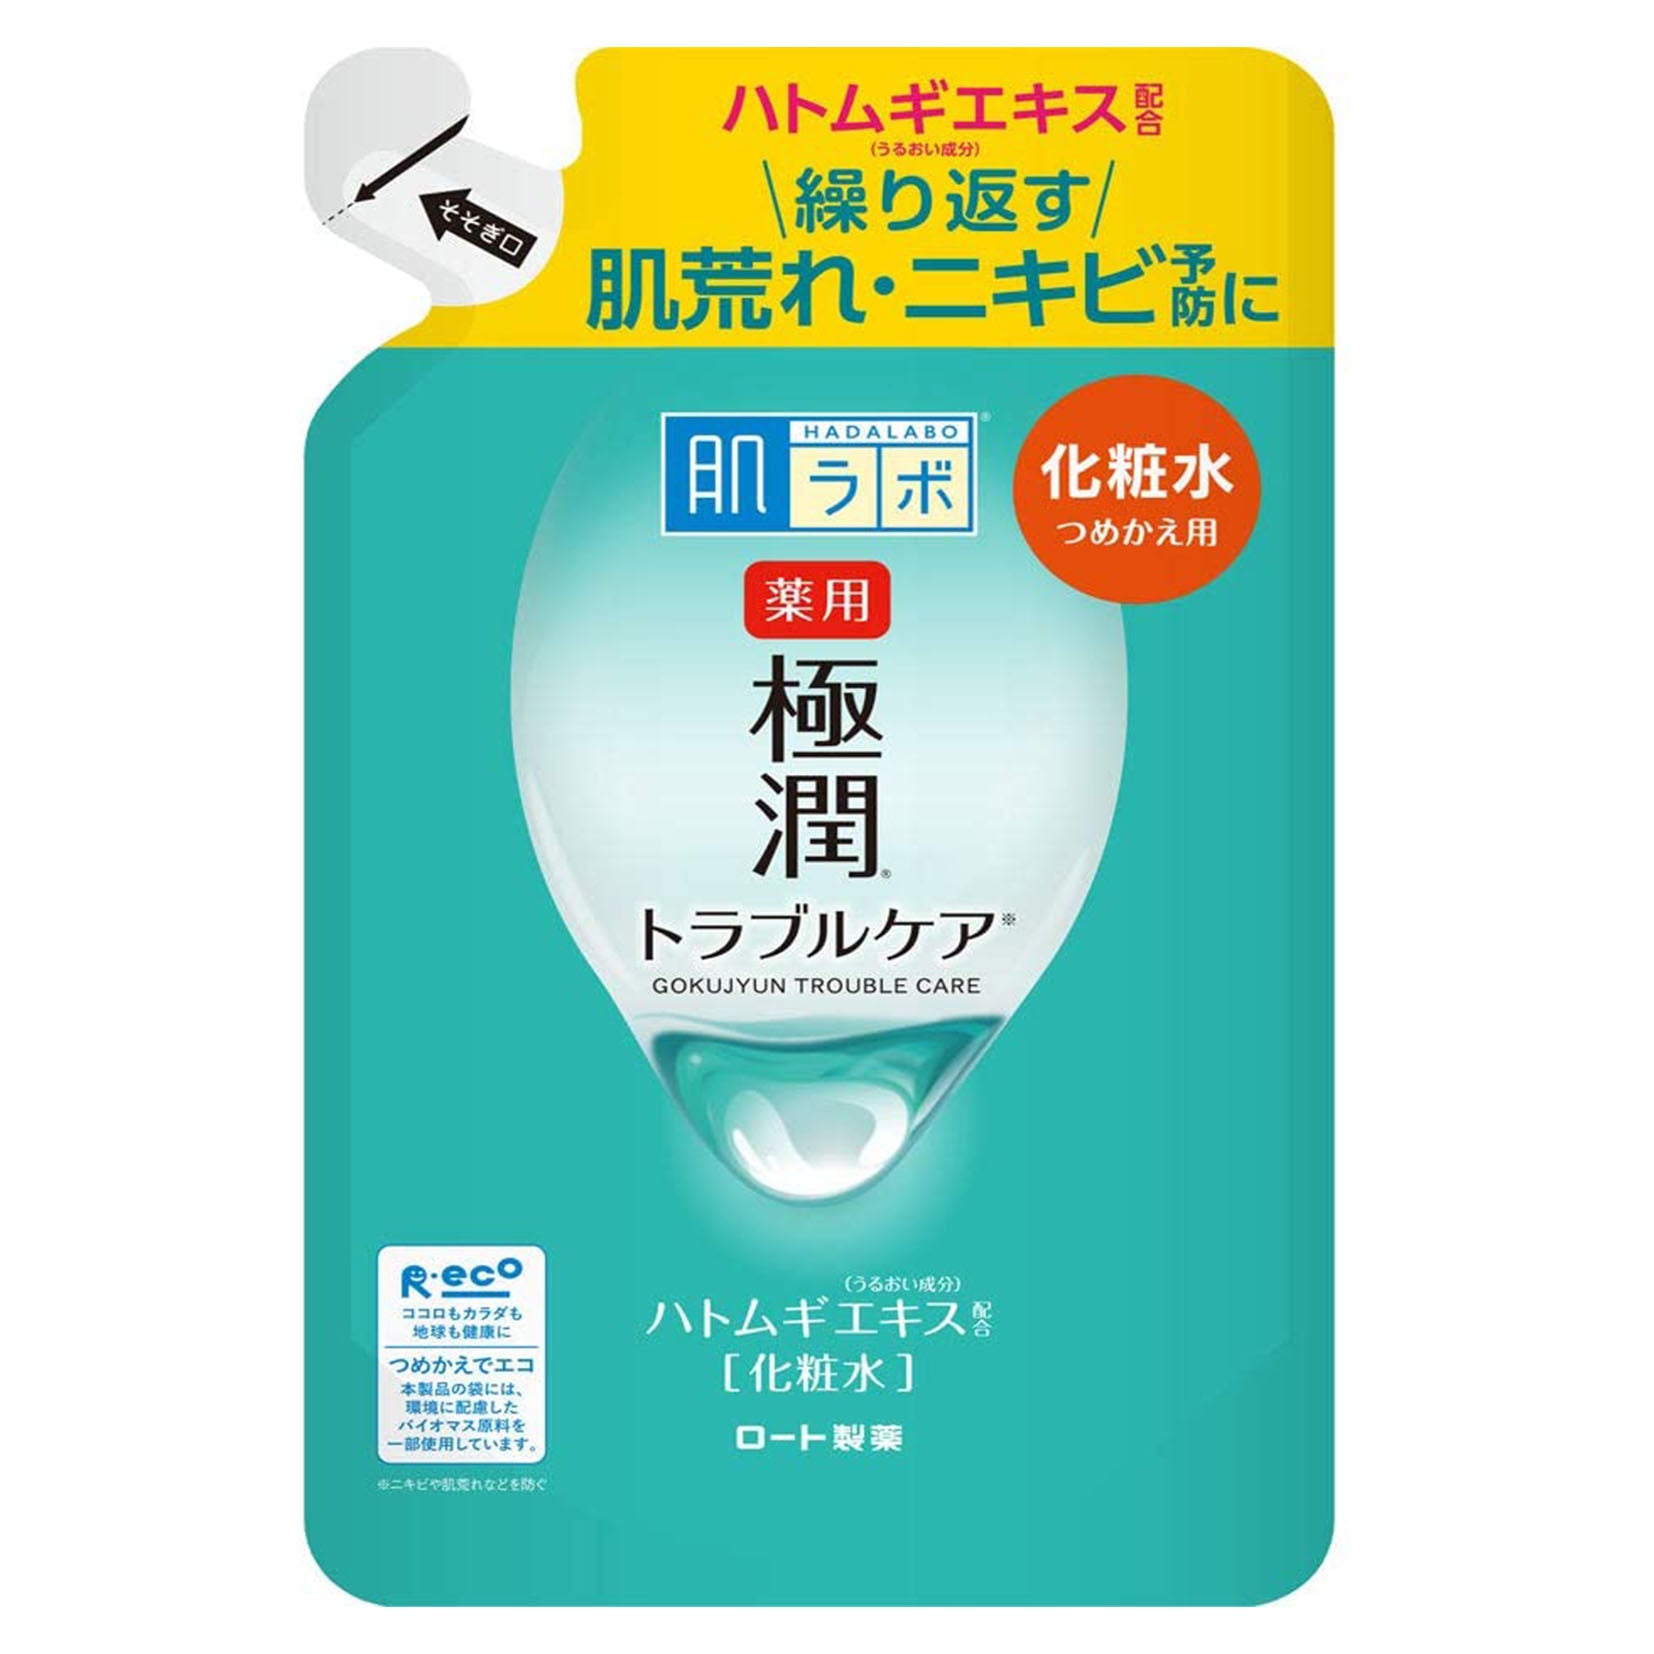 Rohto Hadalabo Gokujun Skin Conditioner -170ml - Refill - Harajuku Culture Japan - Japanease Products Store Beauty and Stationery